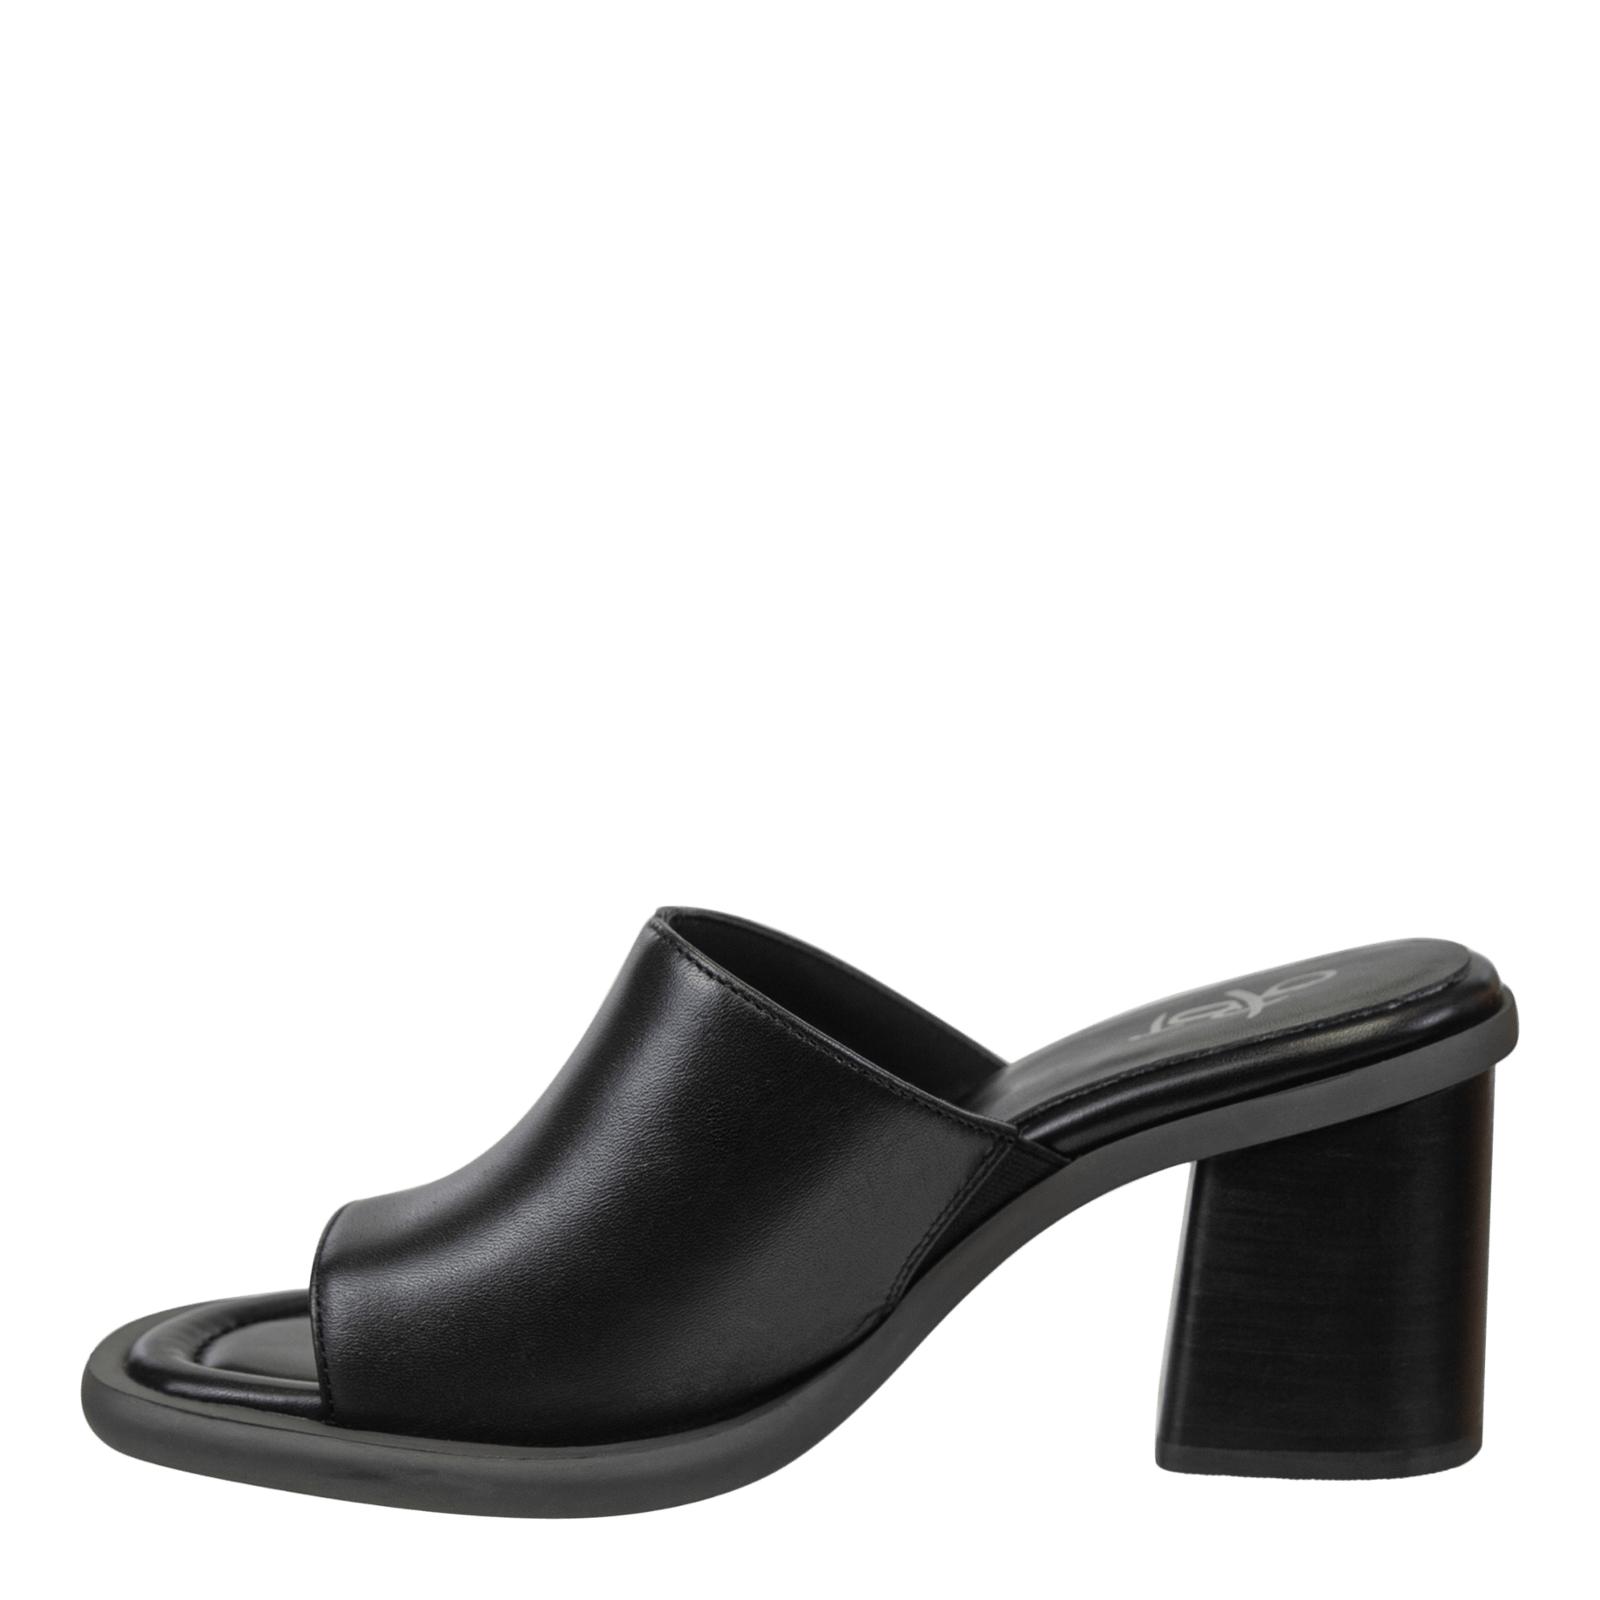 BRAVURA in BLACK Heeled Sandals